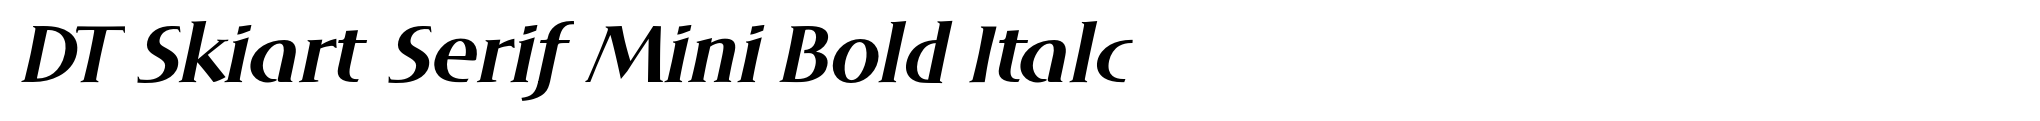 DT Skiart Serif Mini Bold Italc image